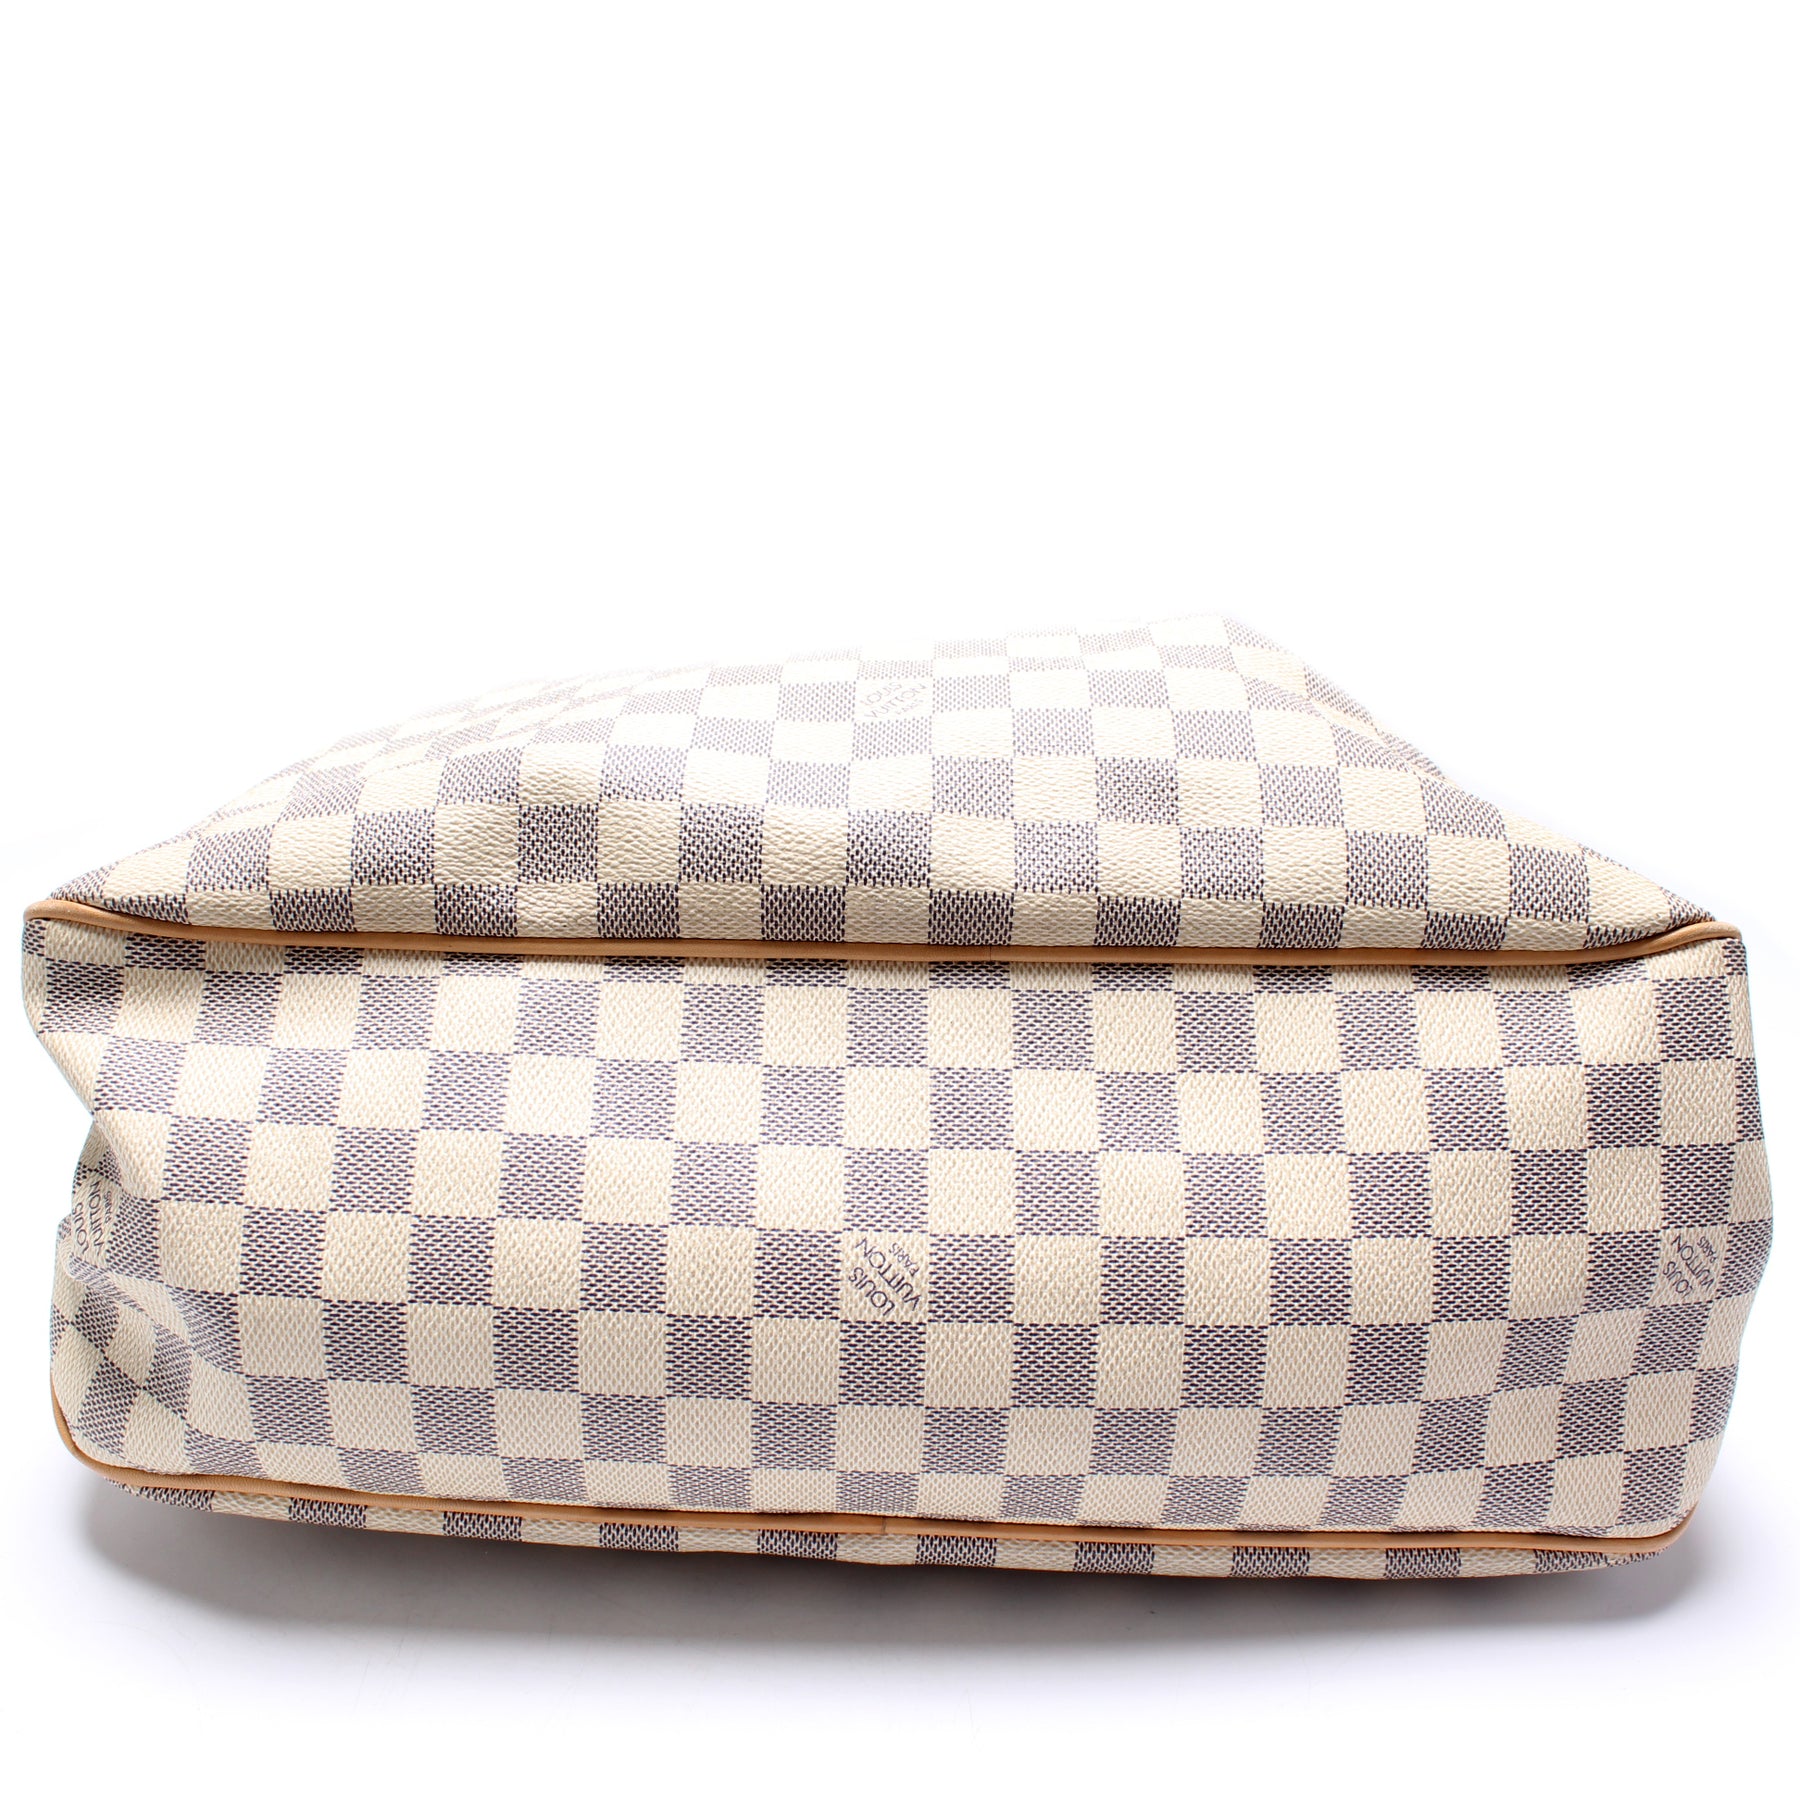 Delightful MM Damier Azur – Keeks Designer Handbags